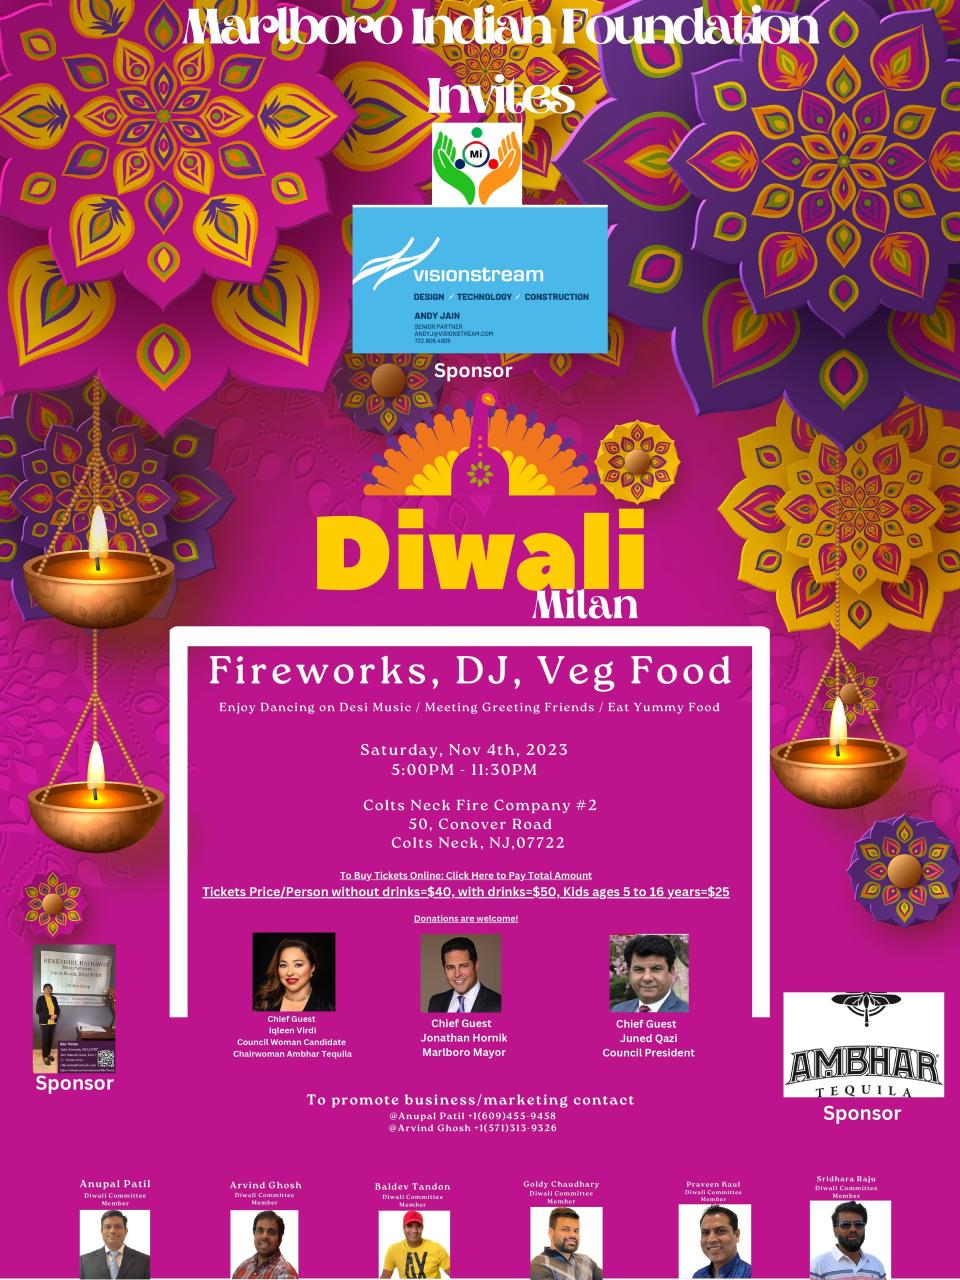 Marlboro Indian Foundation presents a Diwali festival on Saturday in Colts Neck.